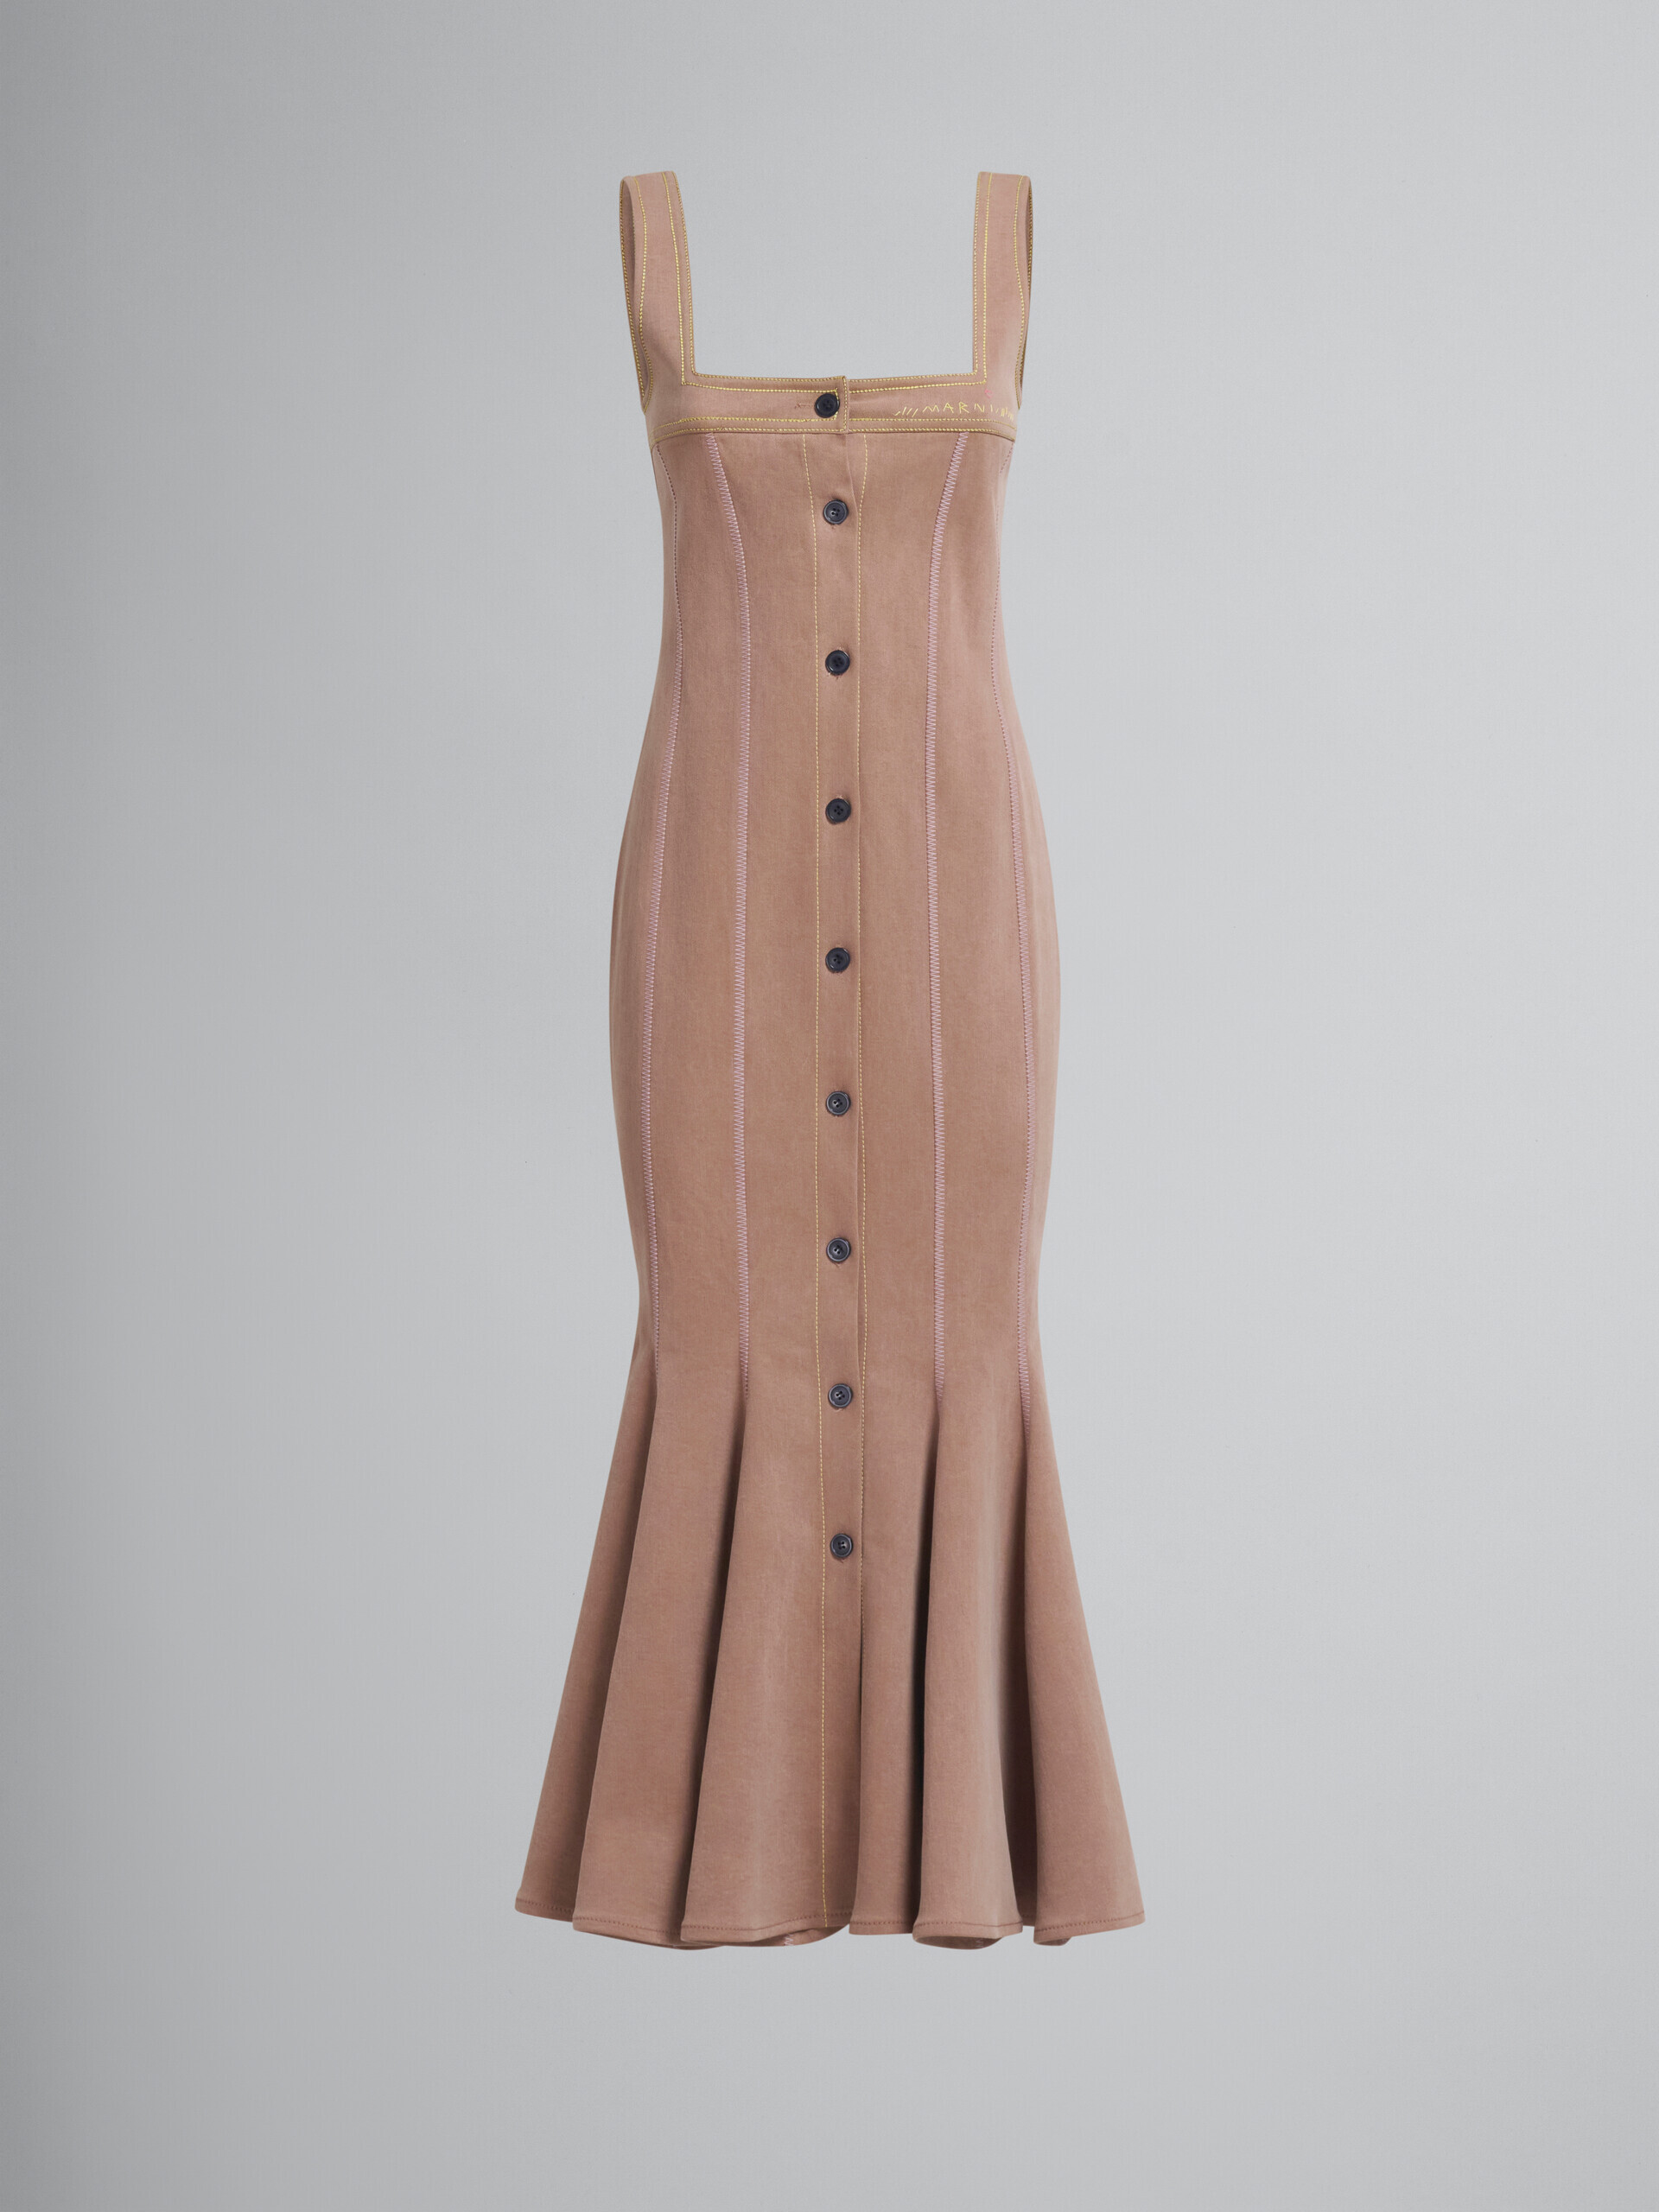 Brown organic denim mermaid dress with contrast stitching - Dresses - Image 2